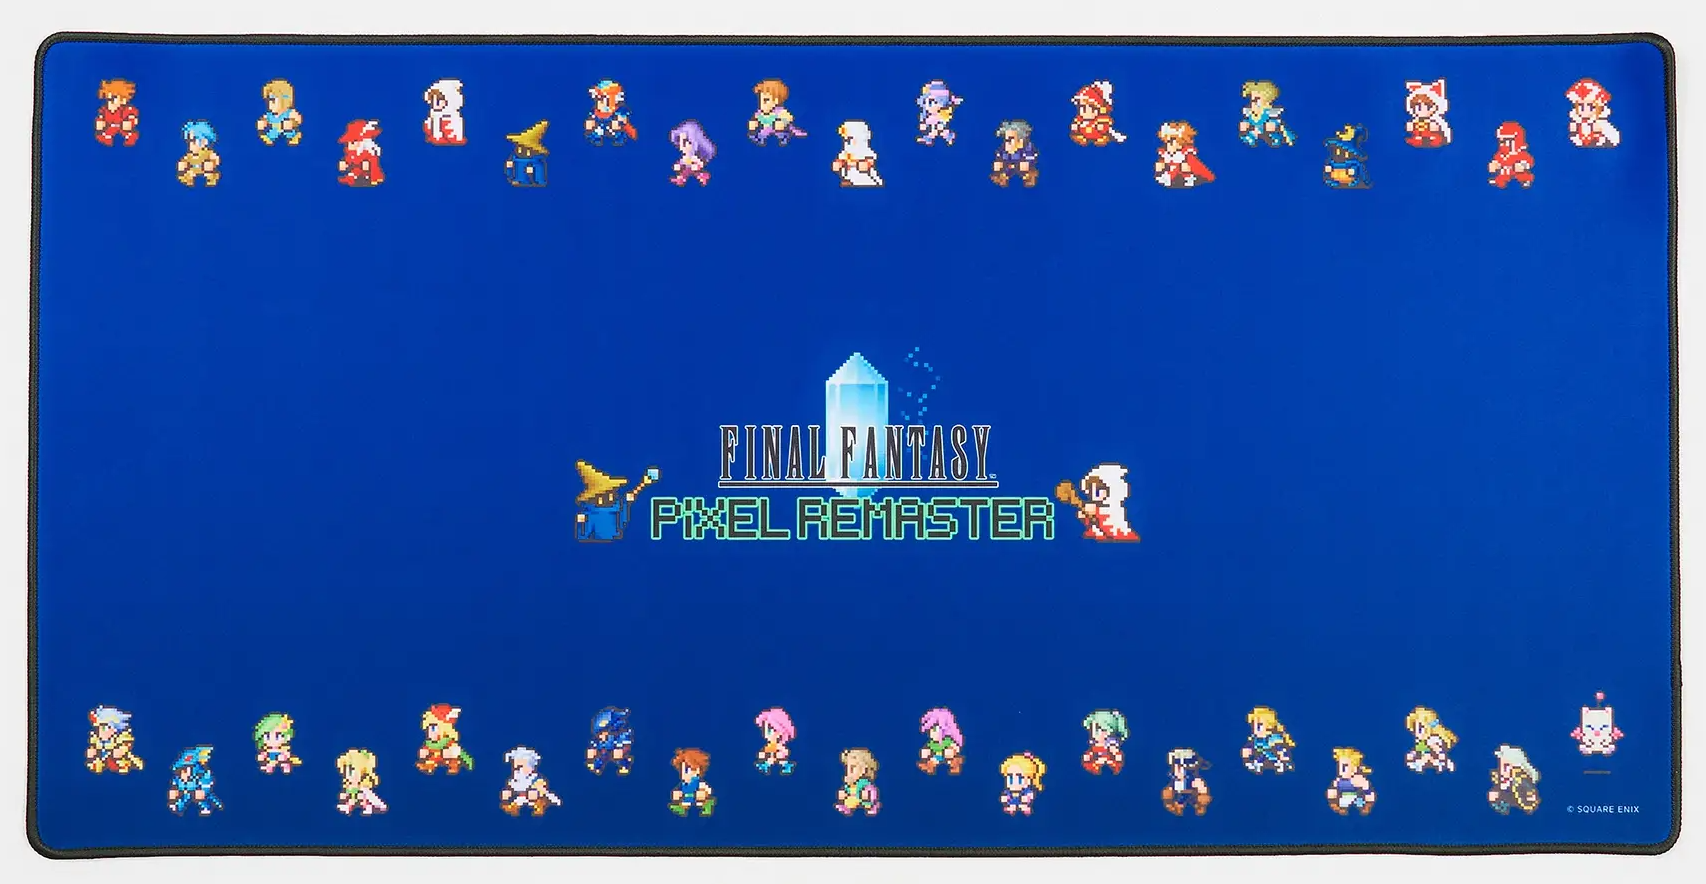 Final Fantasy Pixel Remaster Gaming Mouse Pad Square Enix